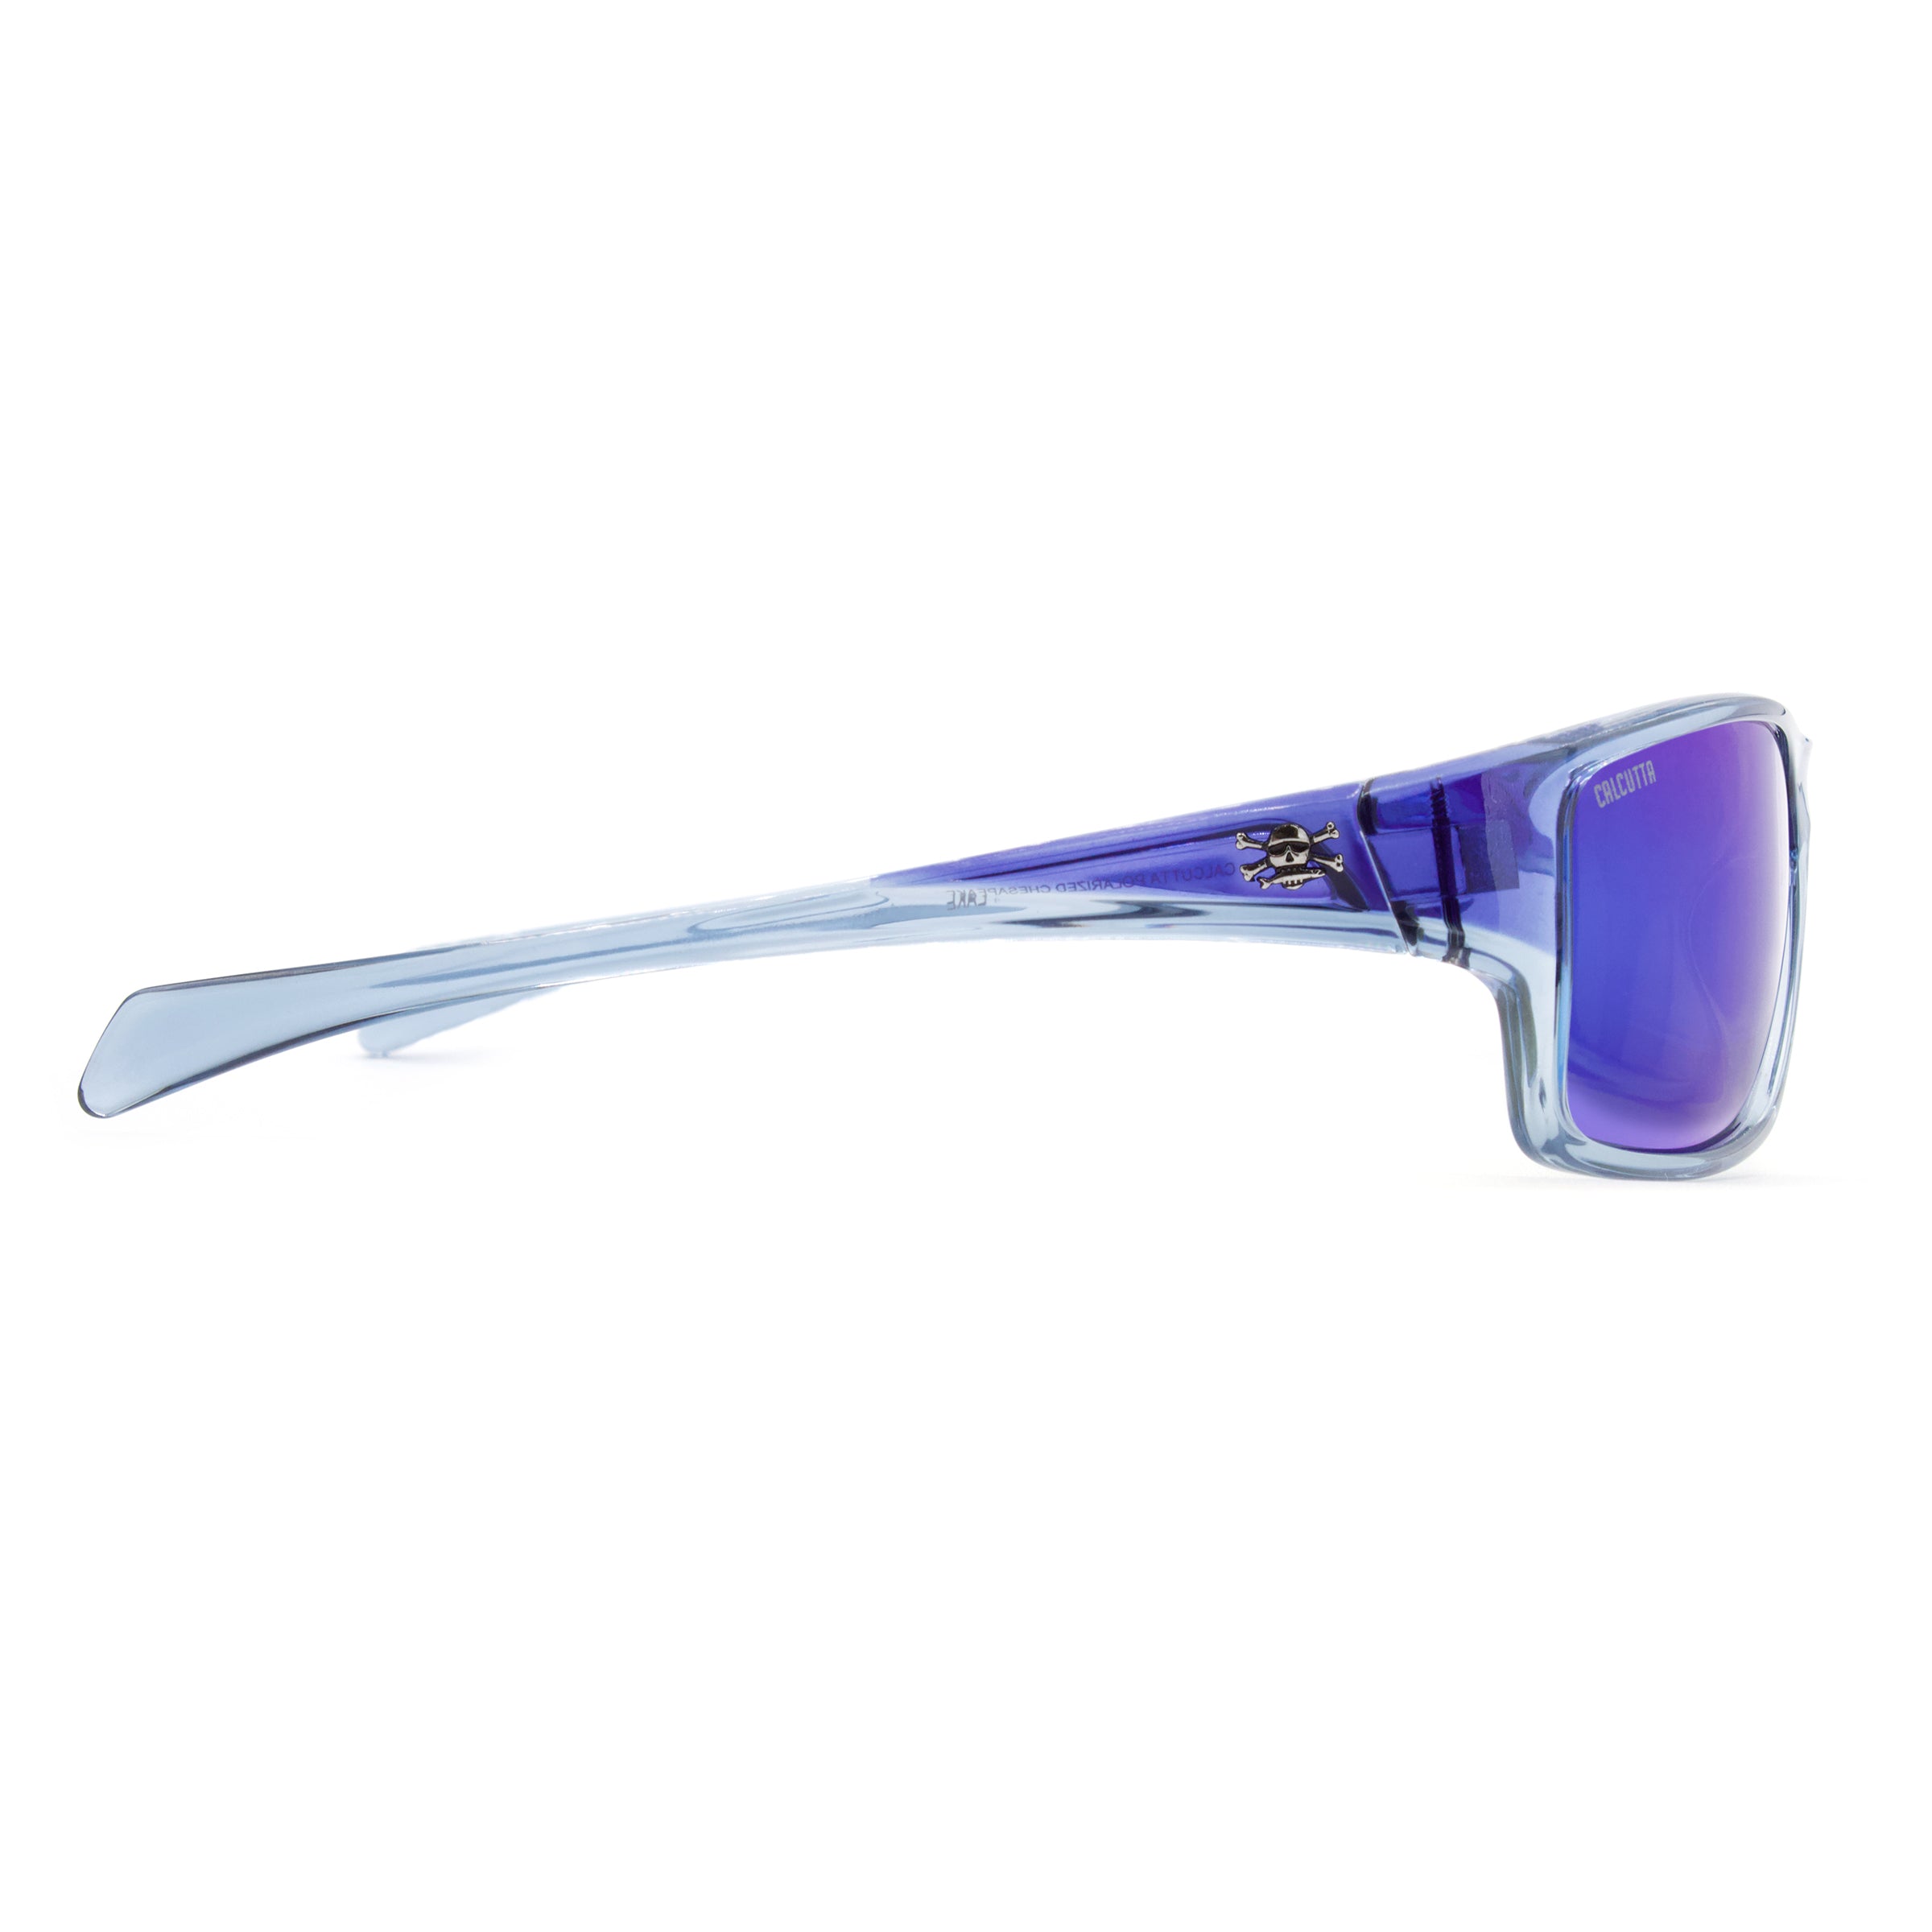 Calcutta Chesapeake sunglasses blue mirror side